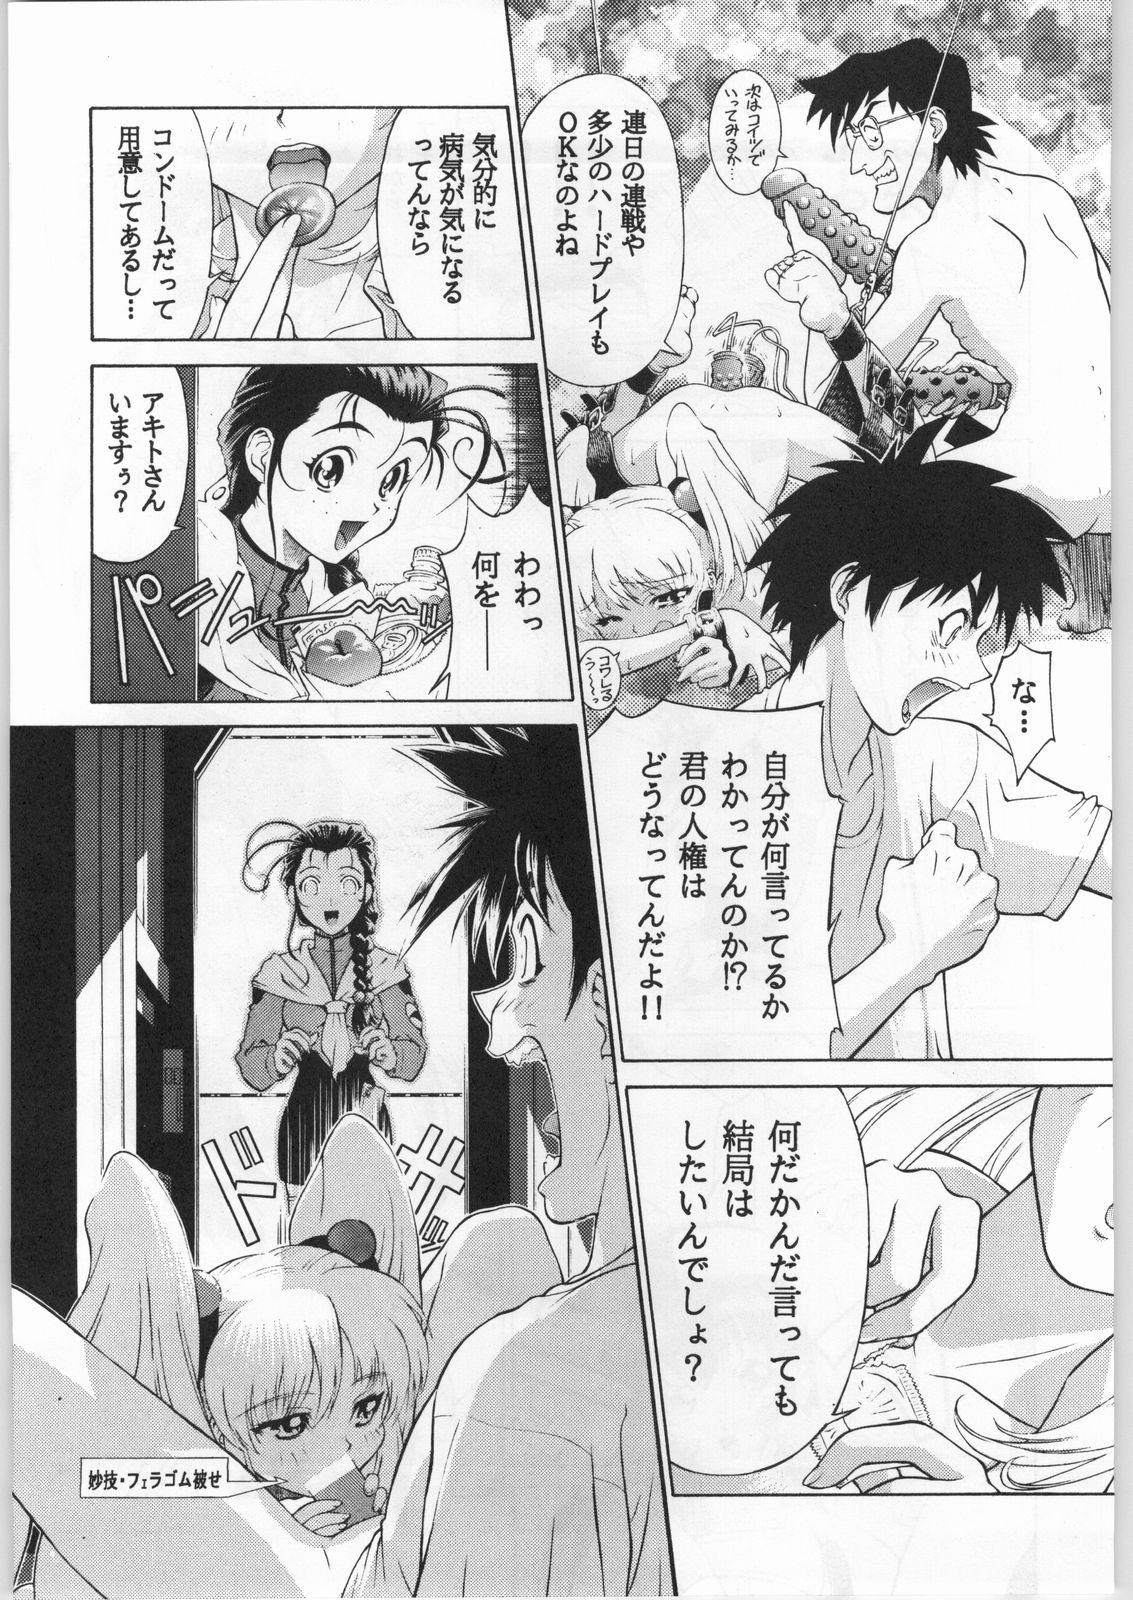 Anime Bros Coteri Magazine 2 - Nadefune 31